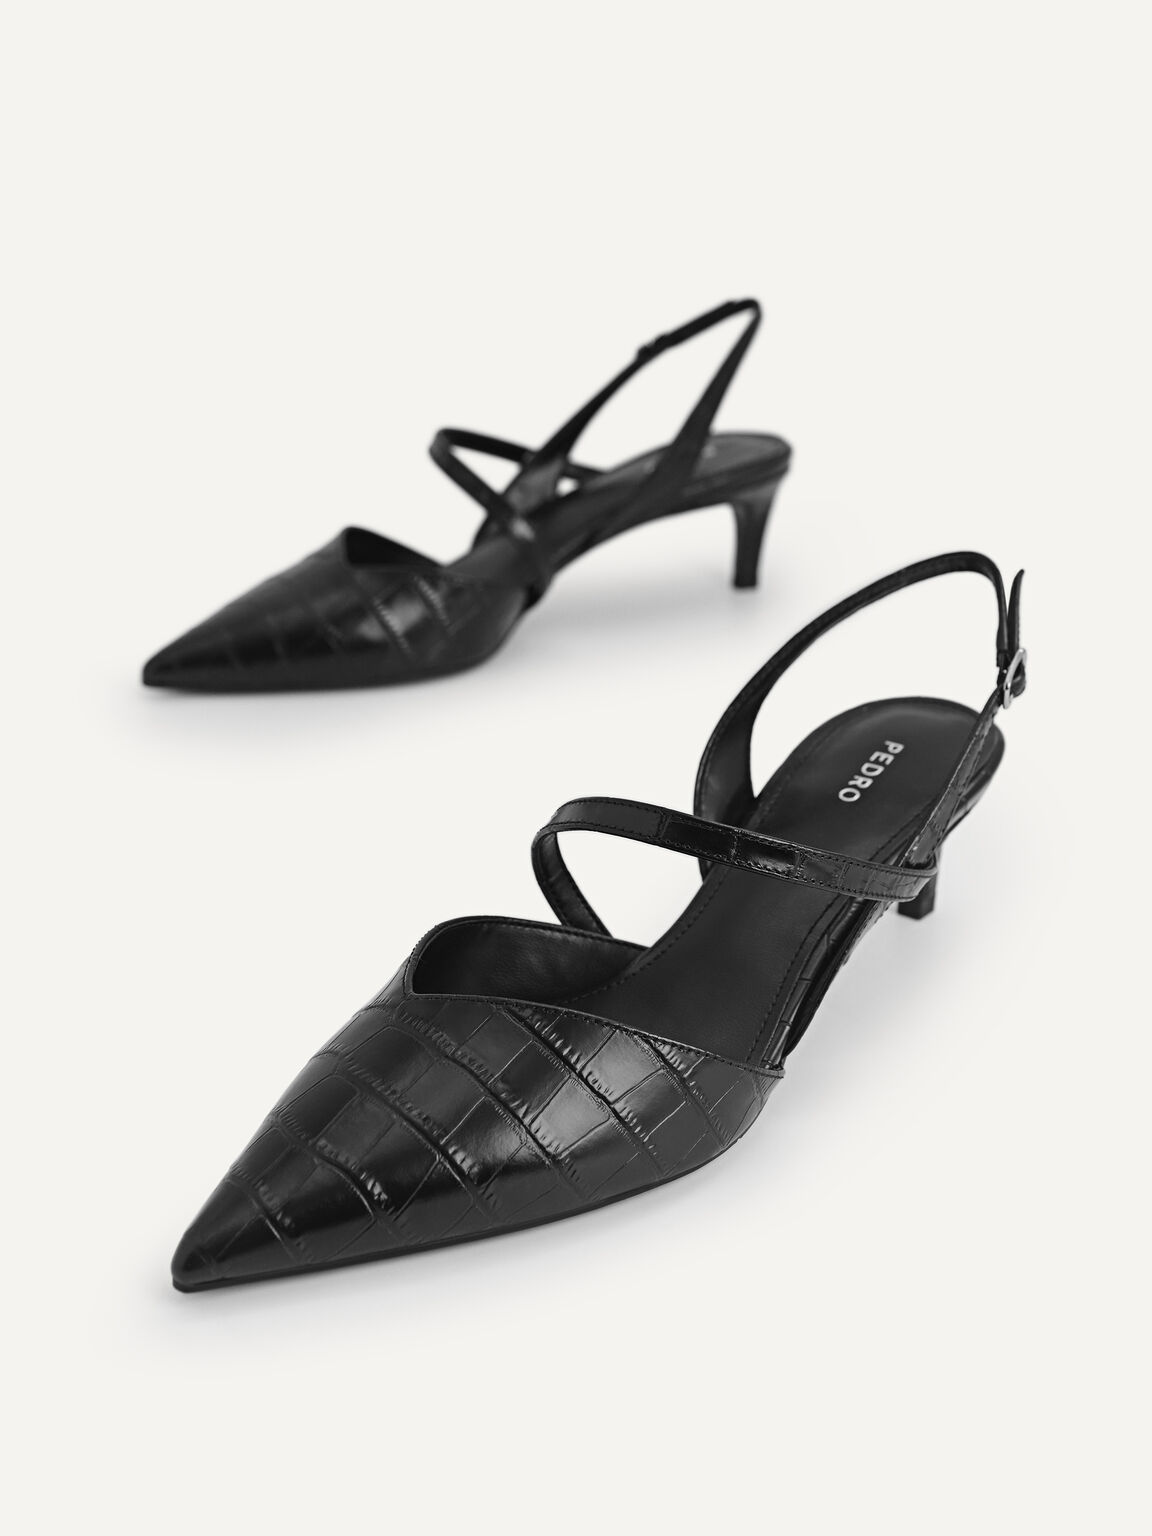 Croc-Effect Leather Slingback Pumps, Black